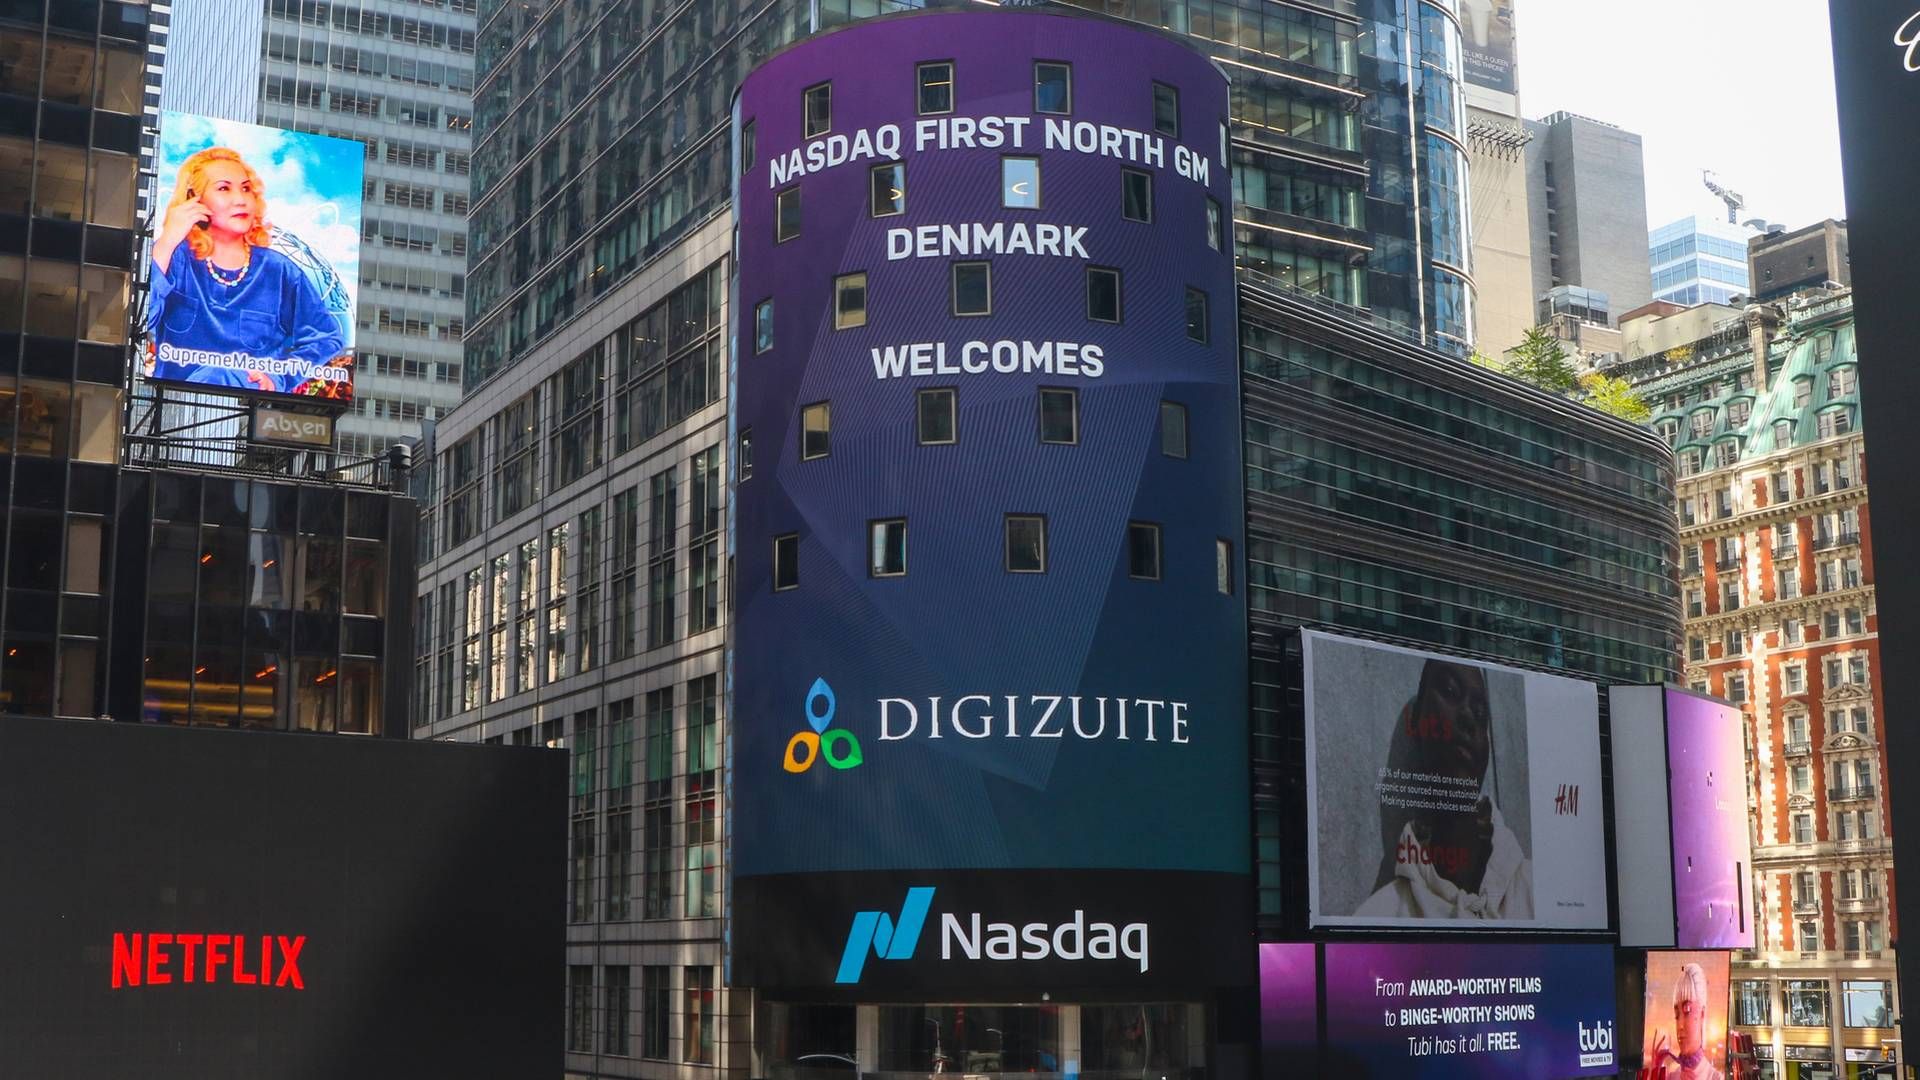 Digizuite gik på Nasdaq First North i 2021. | Foto: Nasdaq / PR